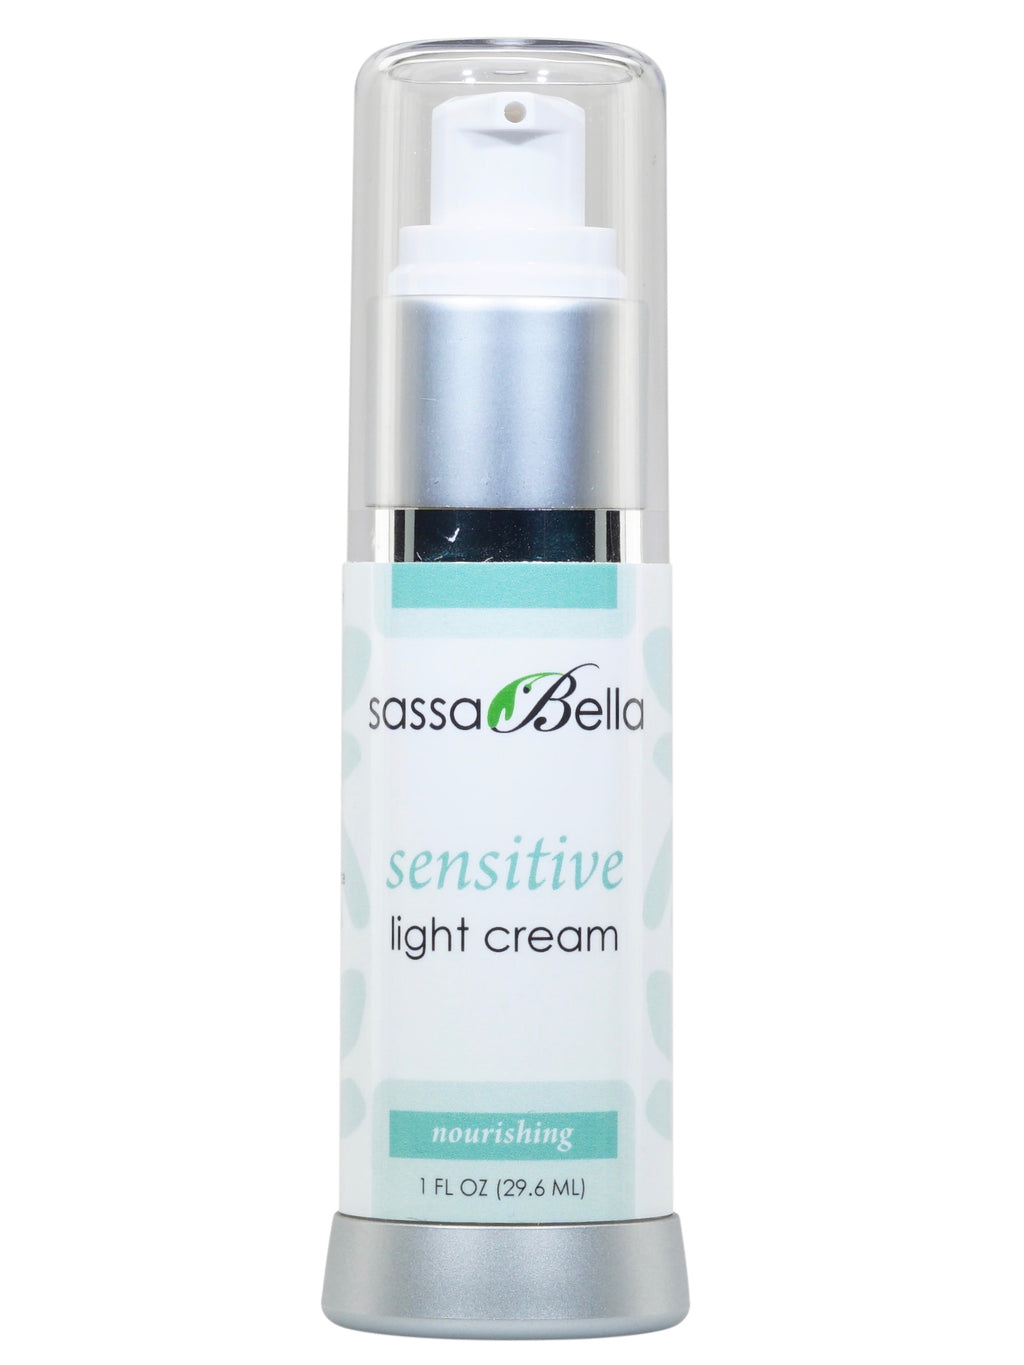 Sensitive Light Cream